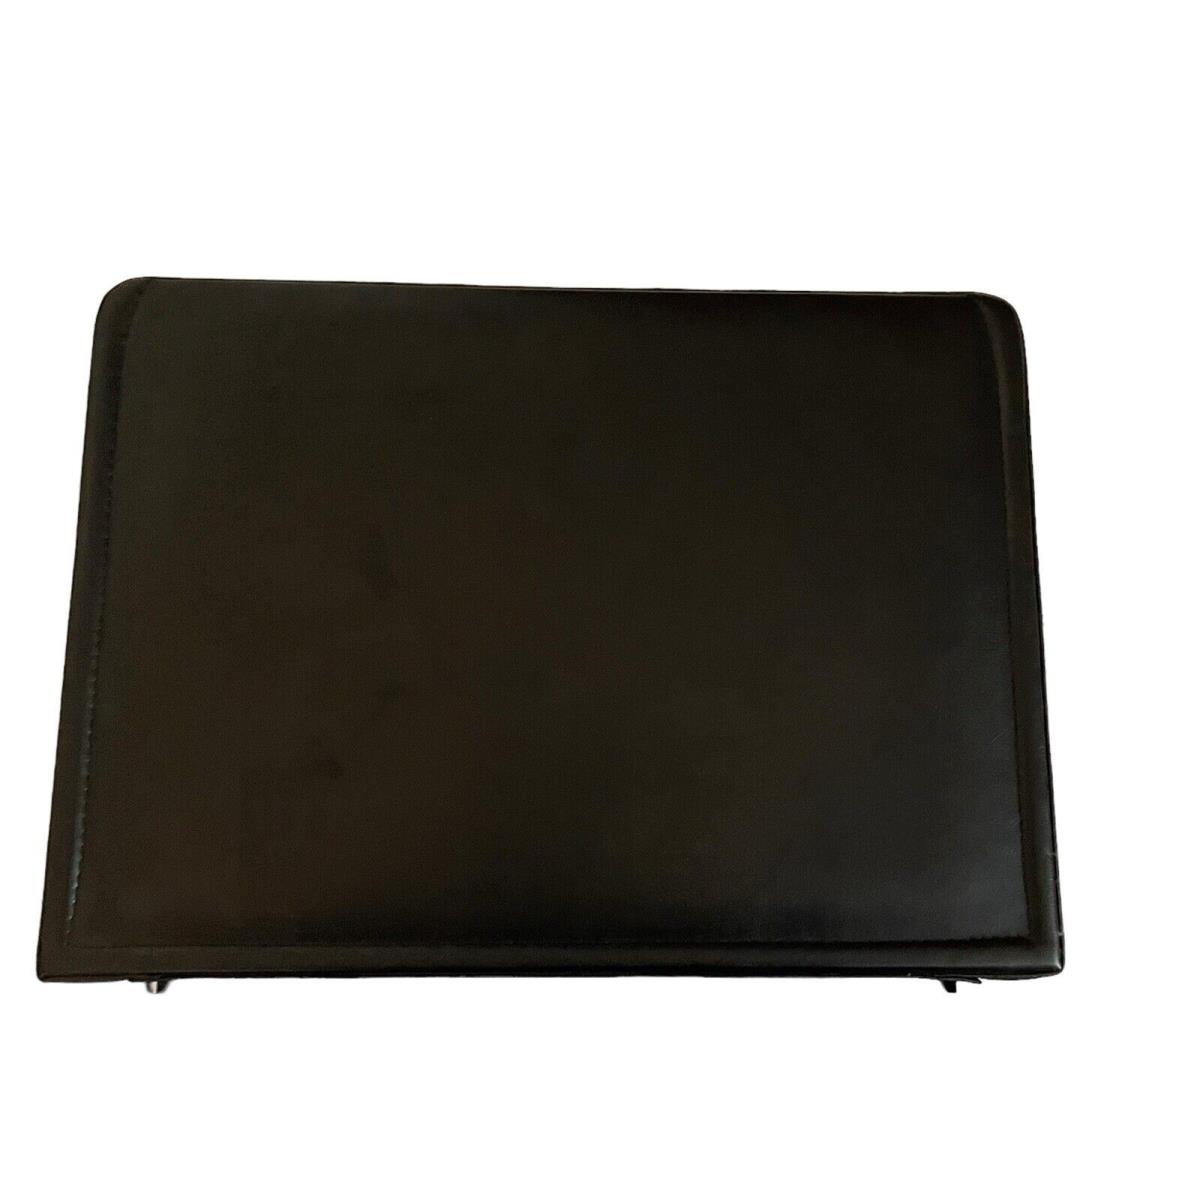 Samsonite Leather Documents Laptop Briefcase Black